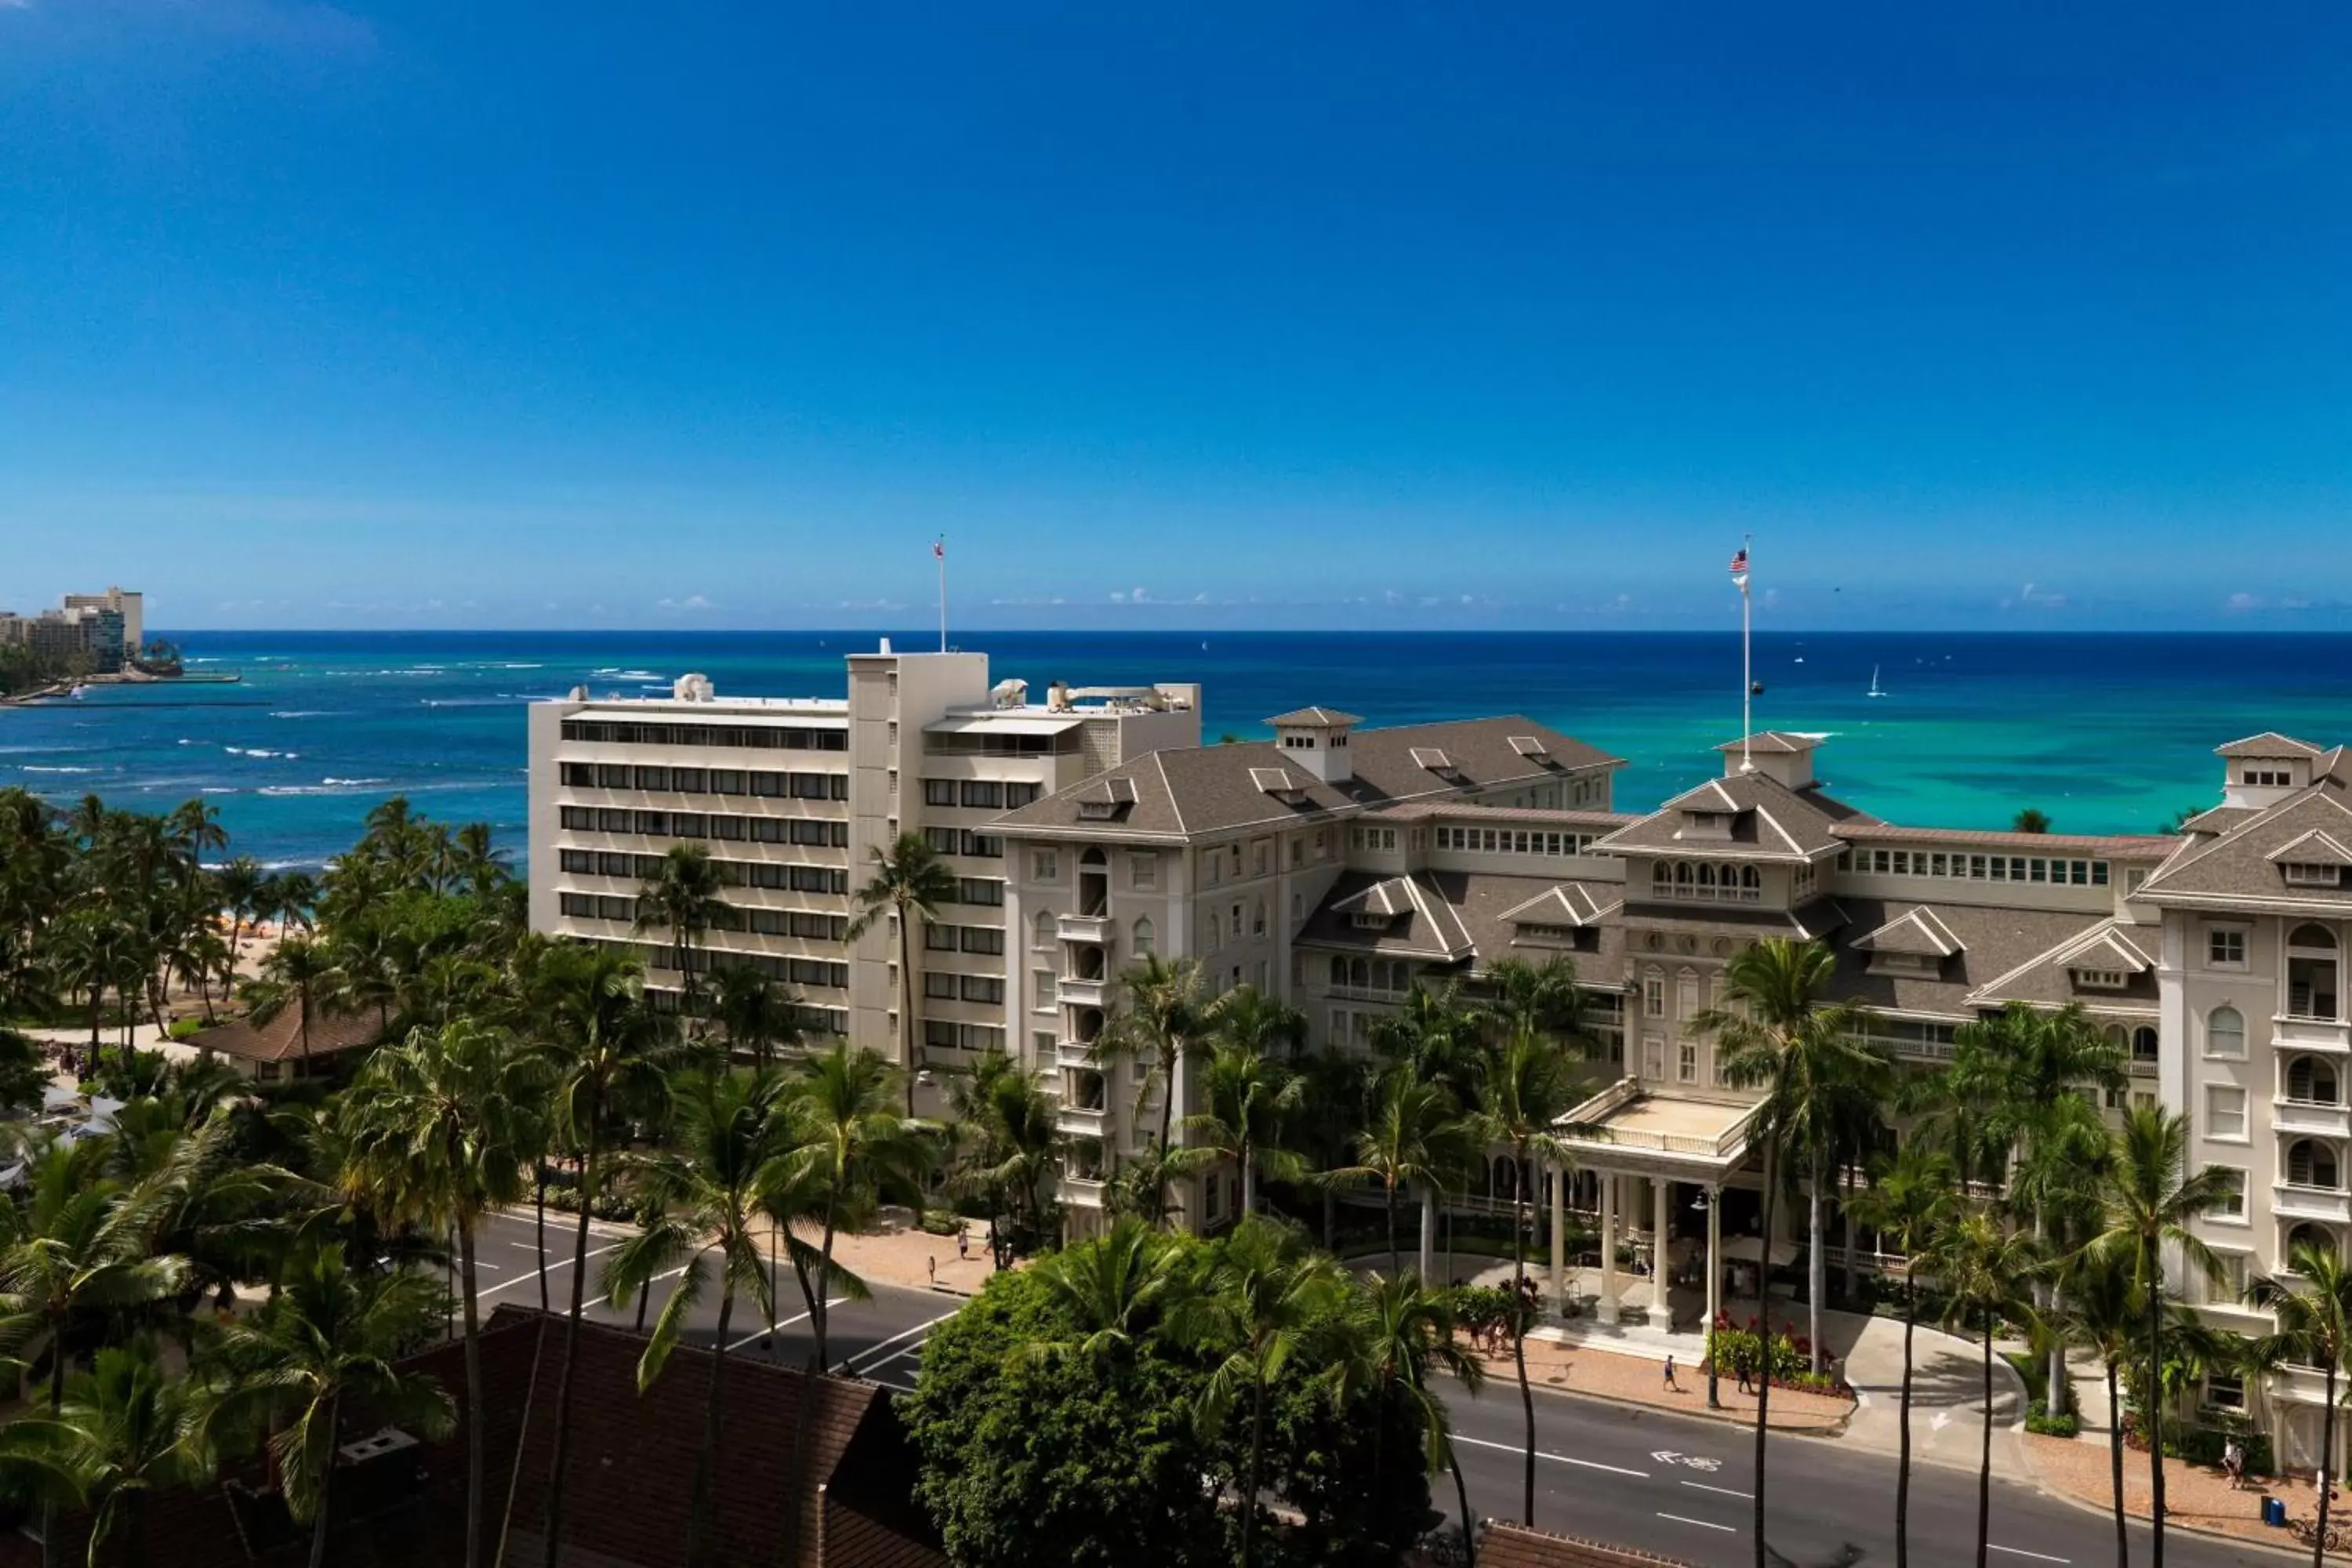 Property building in Moana Surfrider, A Westin Resort & Spa, Waikiki Beach